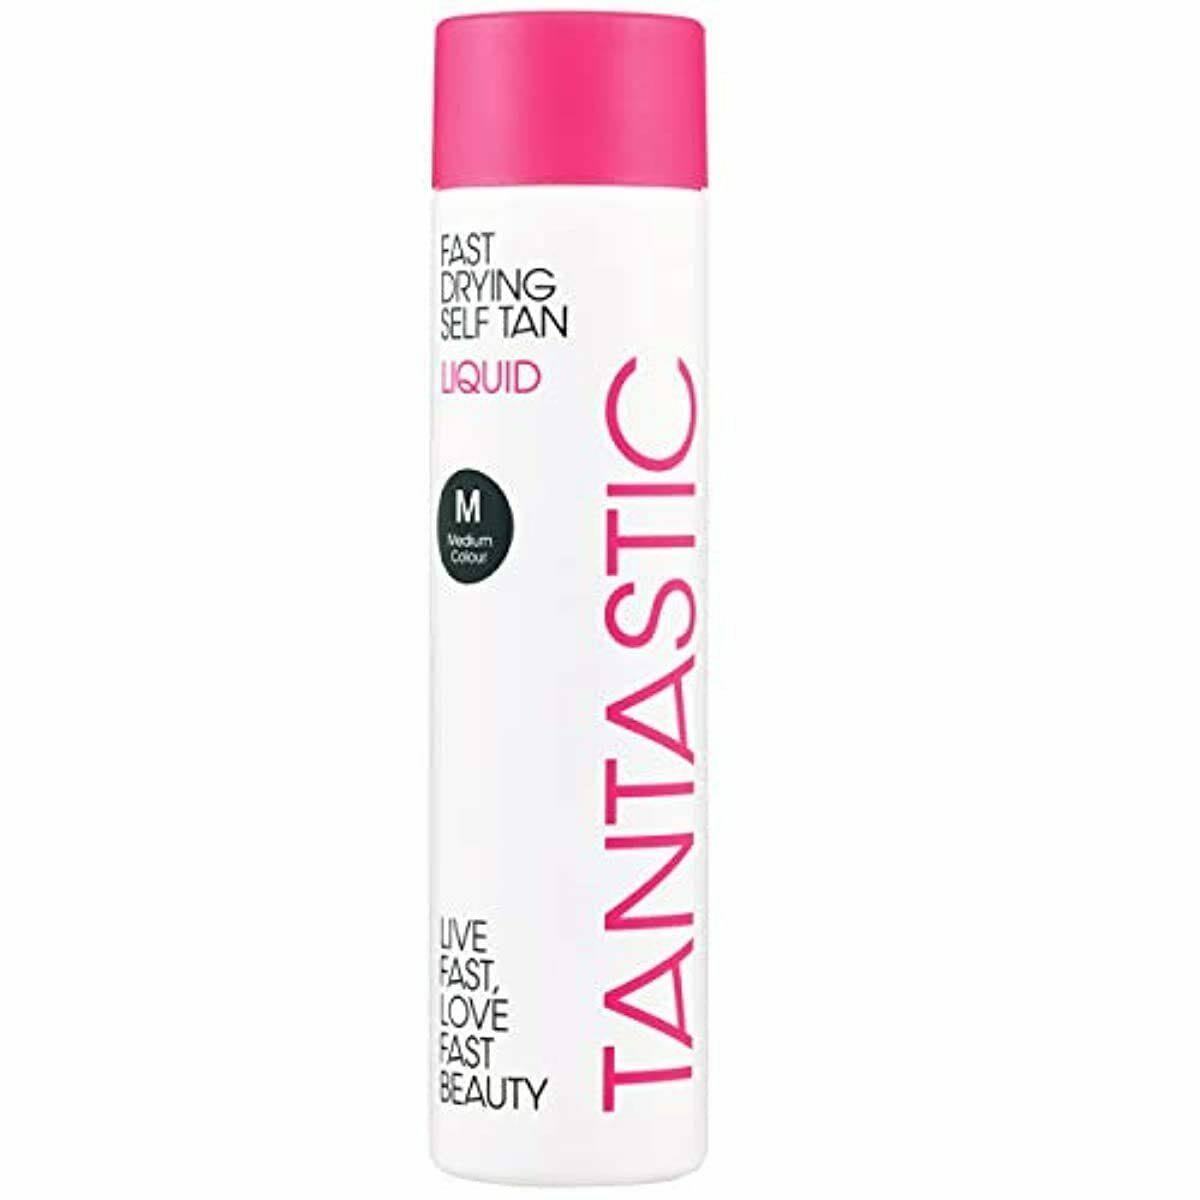 Tantastic Rapid Spray Fast Drying Self-Tan (Medium) 150ml